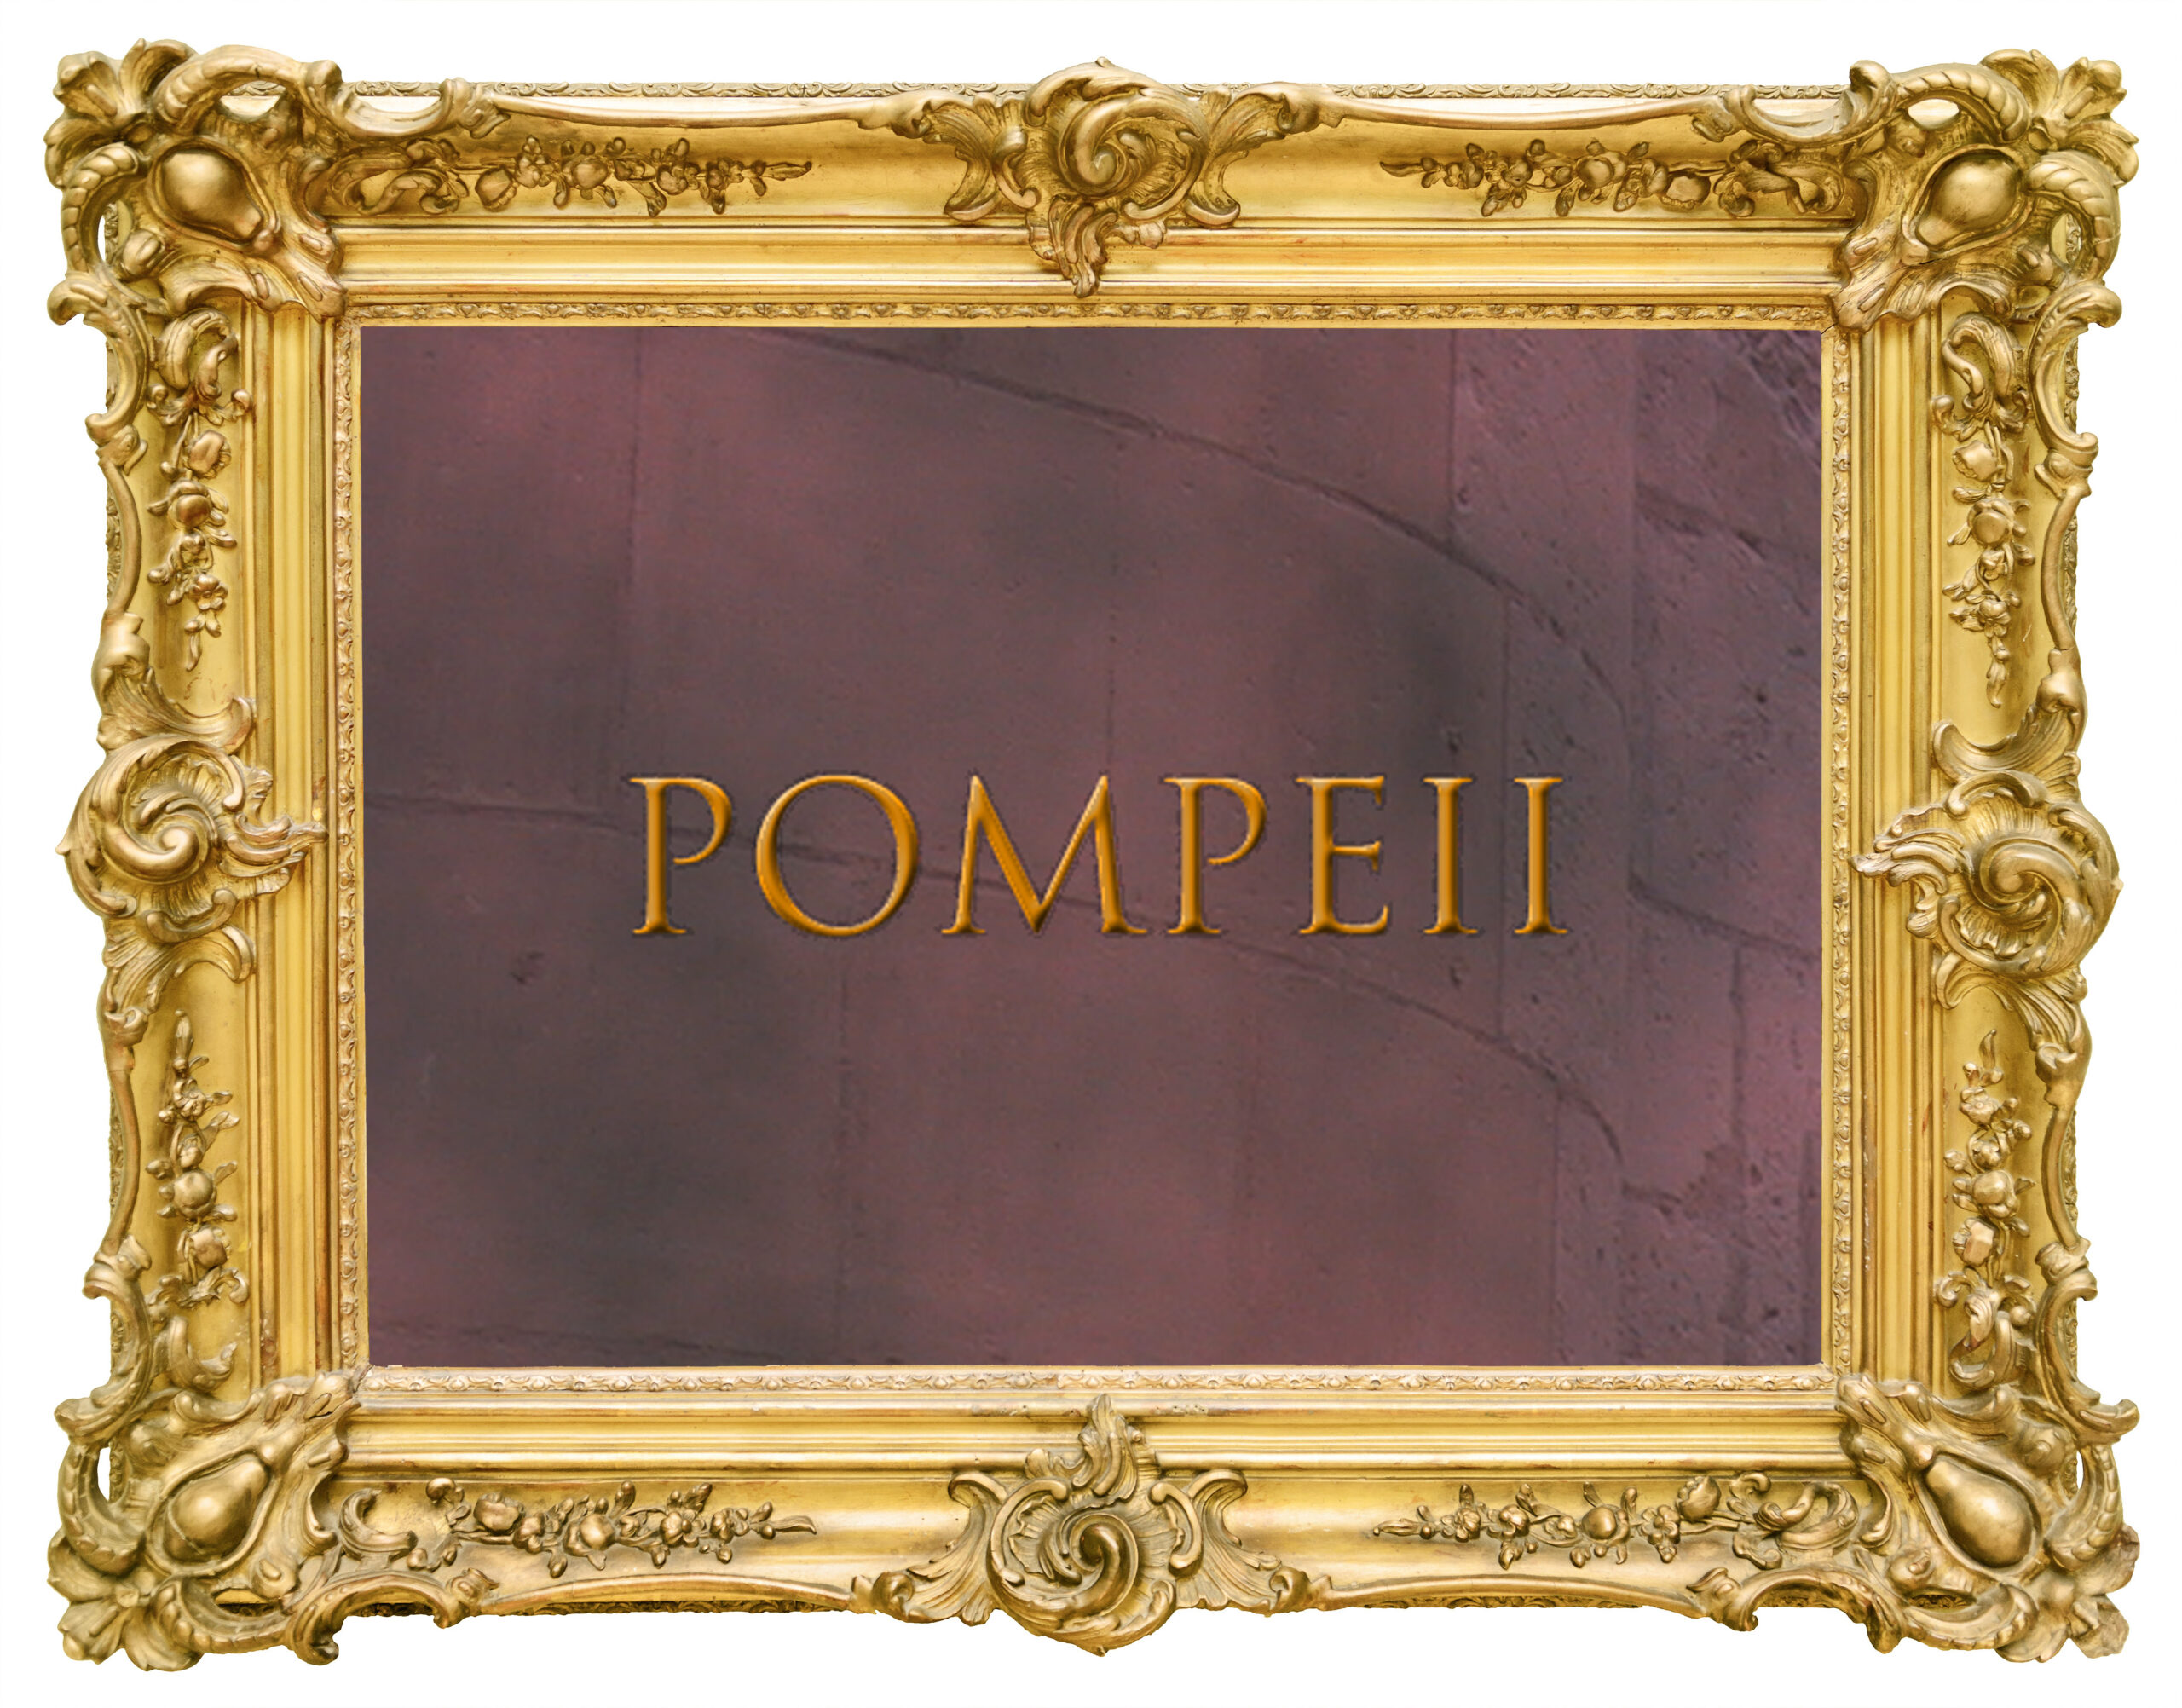 Pompeii A Novel by J. Lightfield